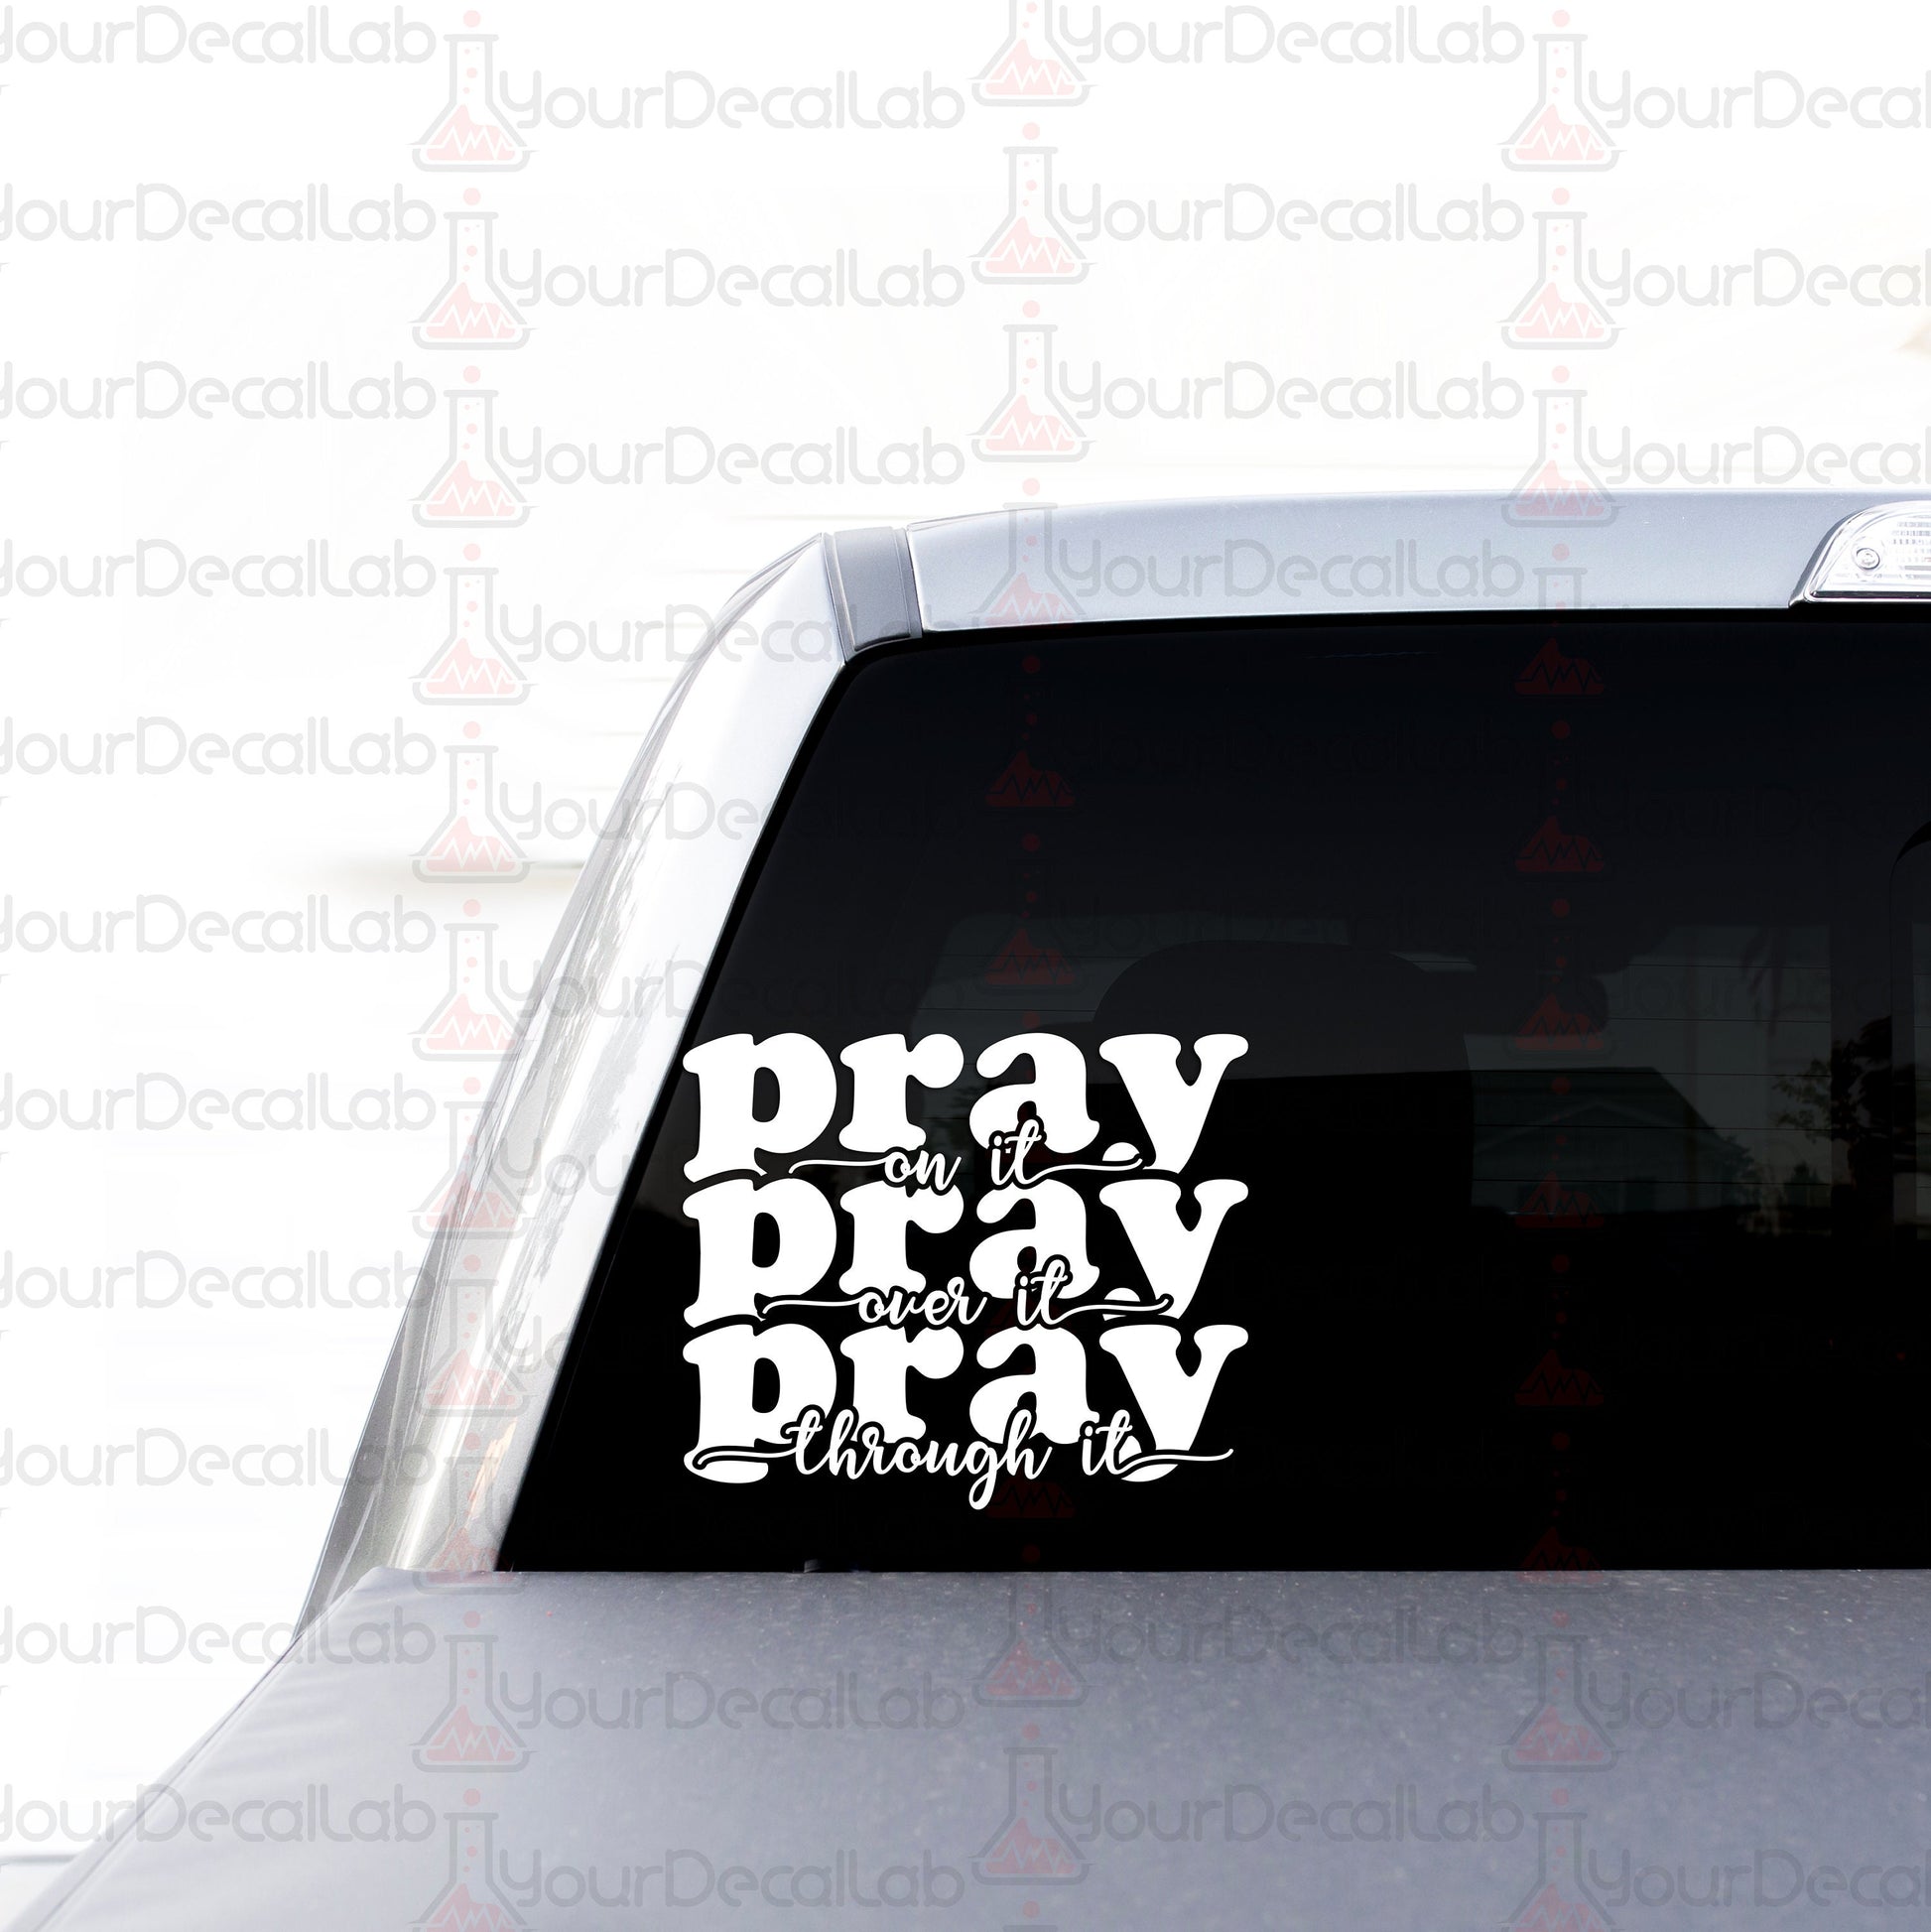 a car with a sticker that says pray pray pray pray pray pray pray pray